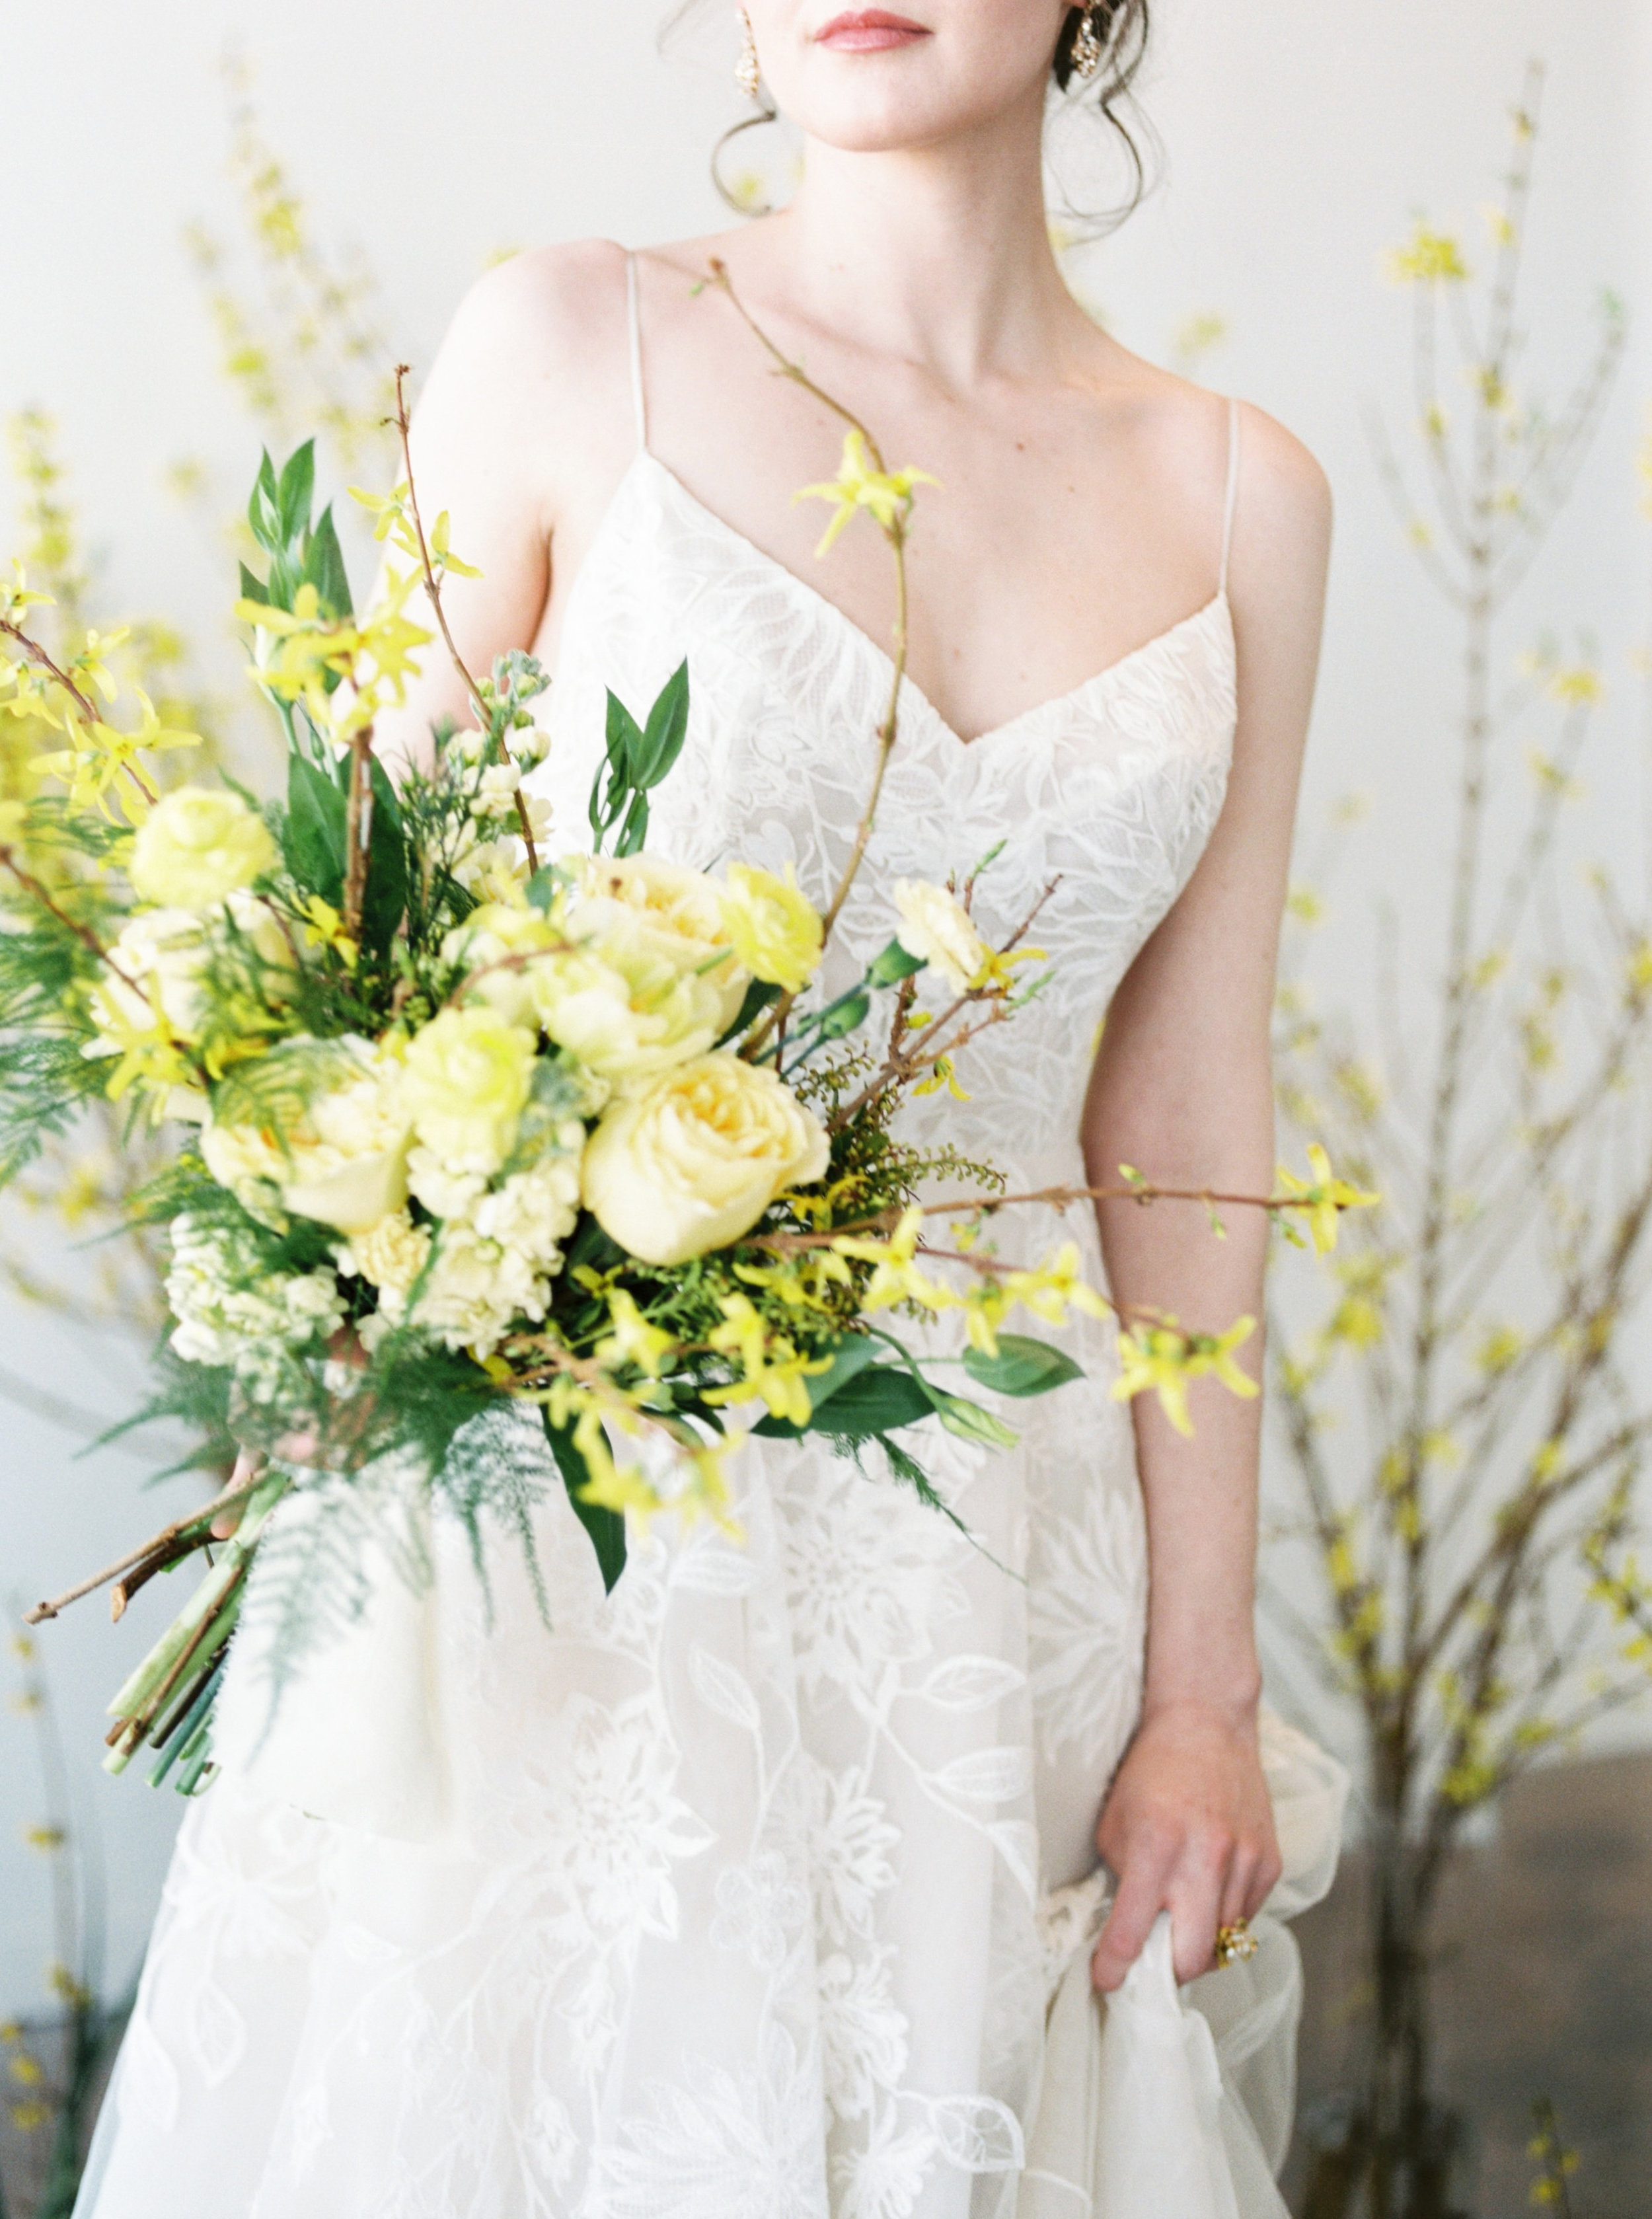  Lela Rose "The Altar" wedding dress | Spring Bridal Inspiration from Little White Dress Bridal Shop in Denver, Colorado | Decorus Photography 